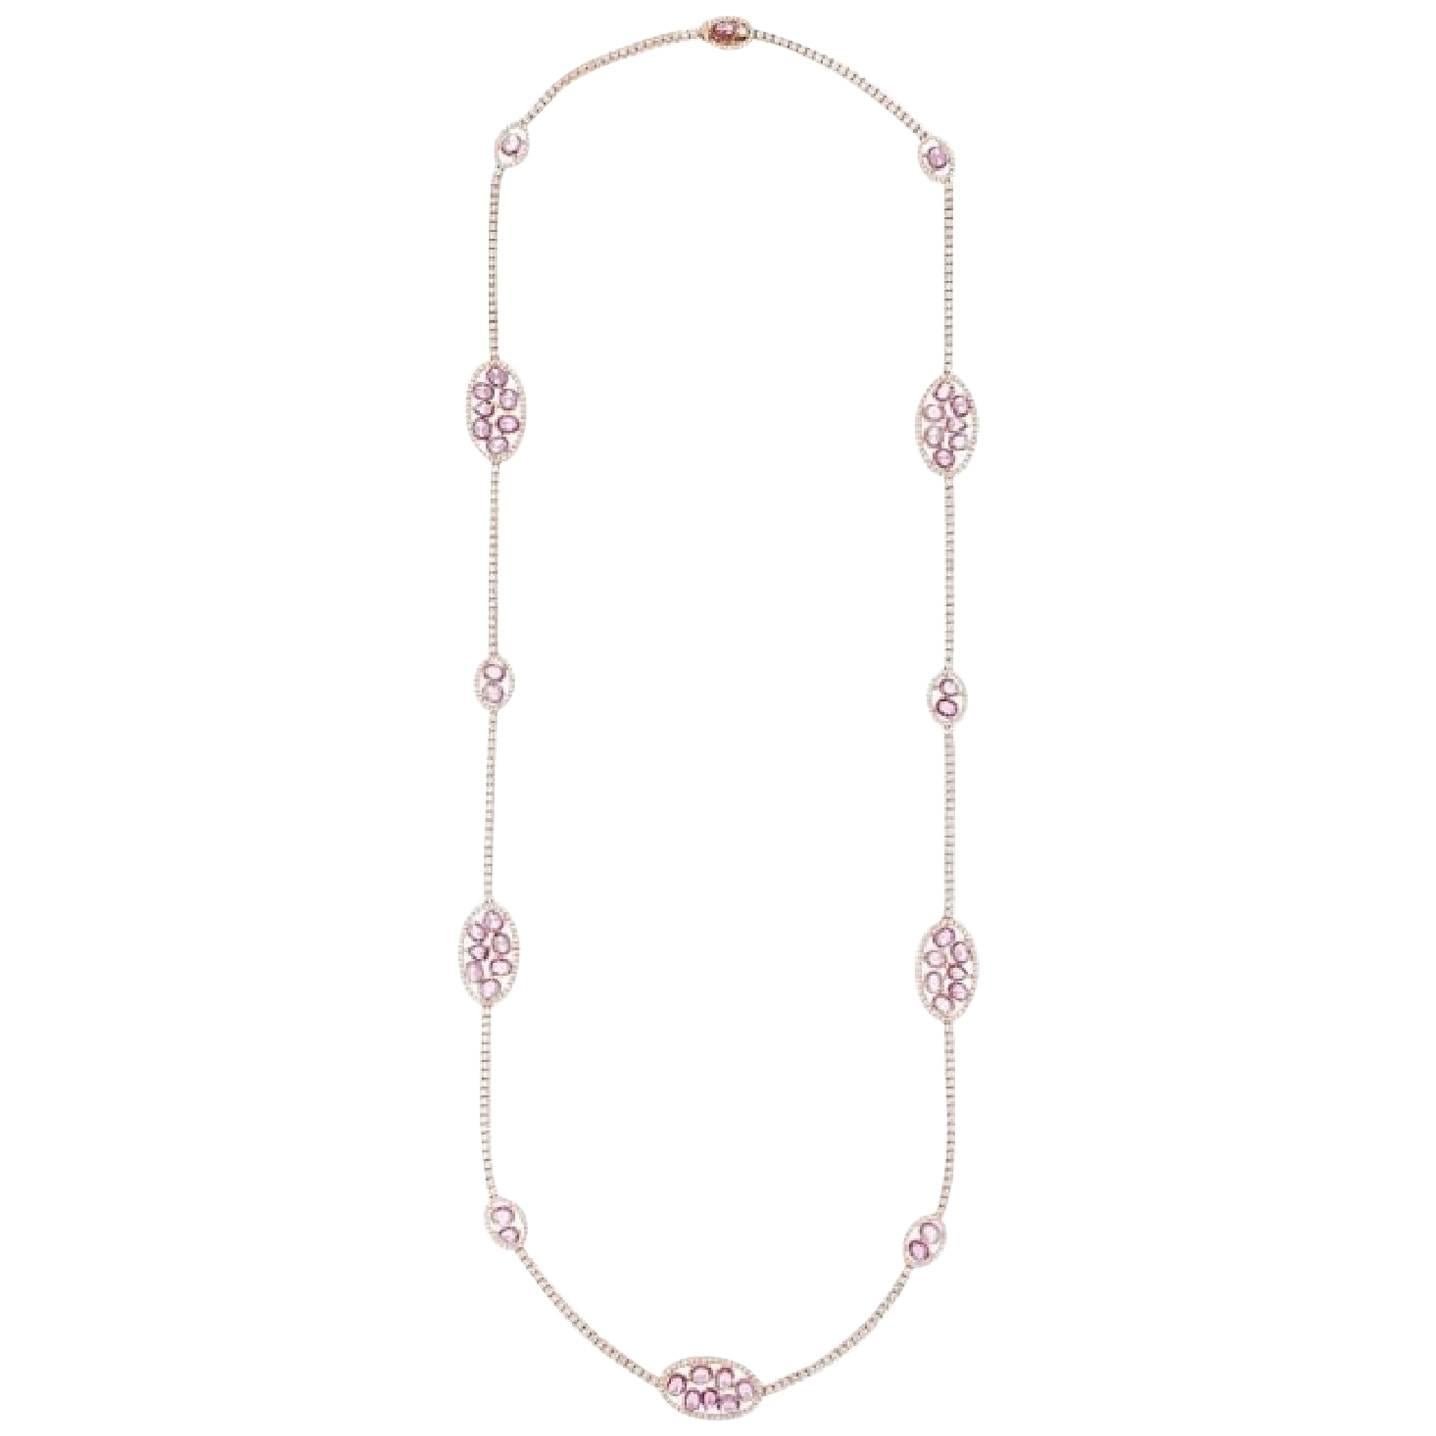 Diana M Jewels 15.00 Carat Pink Sapphire and Diamond Riviera Necklace